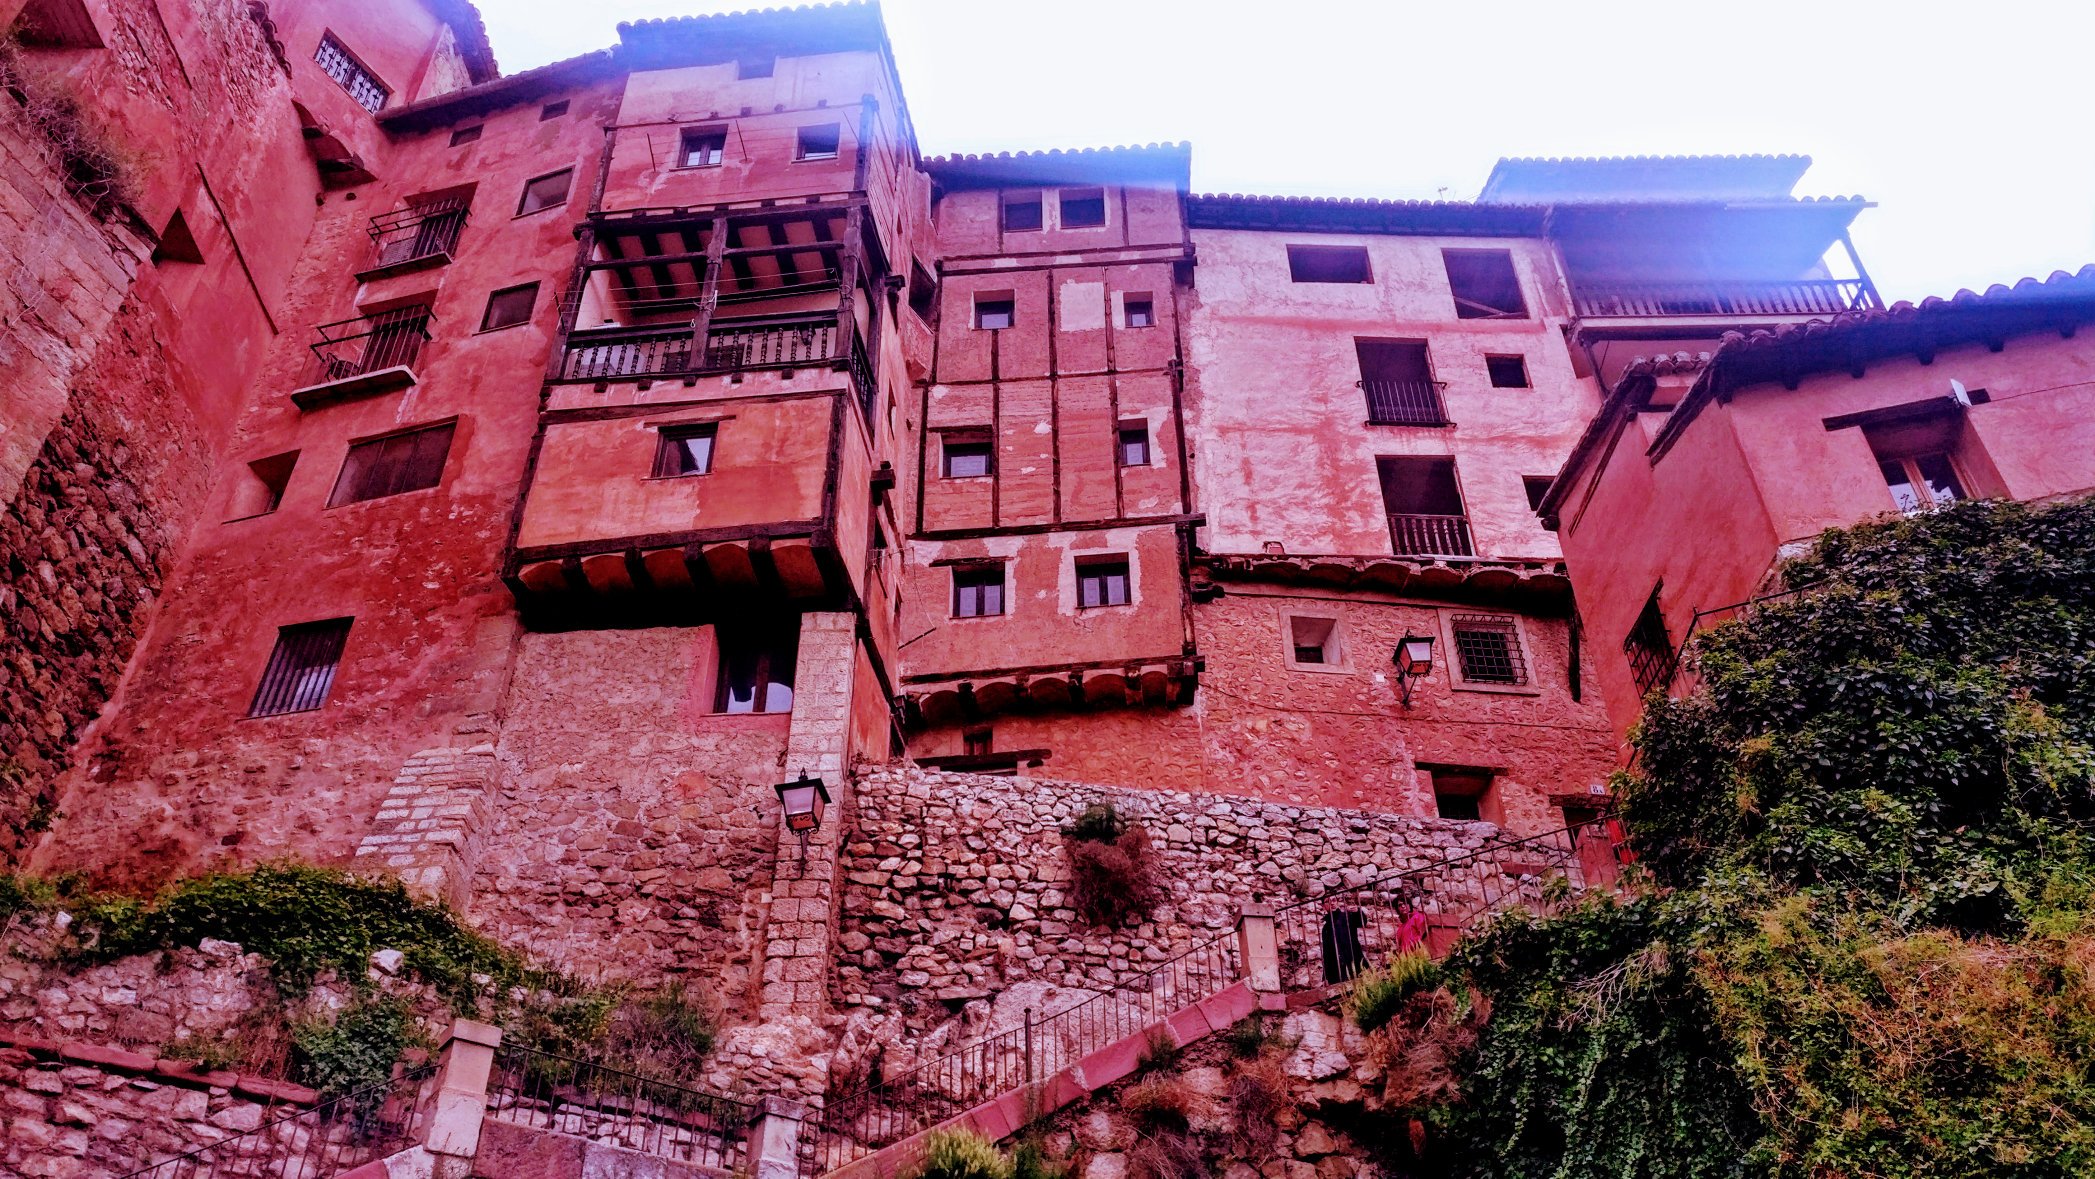 on Twitter: "Casas colgadas. Albarracín. #Teruel. #fotosdeviajes #travelphotography https://t.co/dpHTgdS3fC" / Twitter